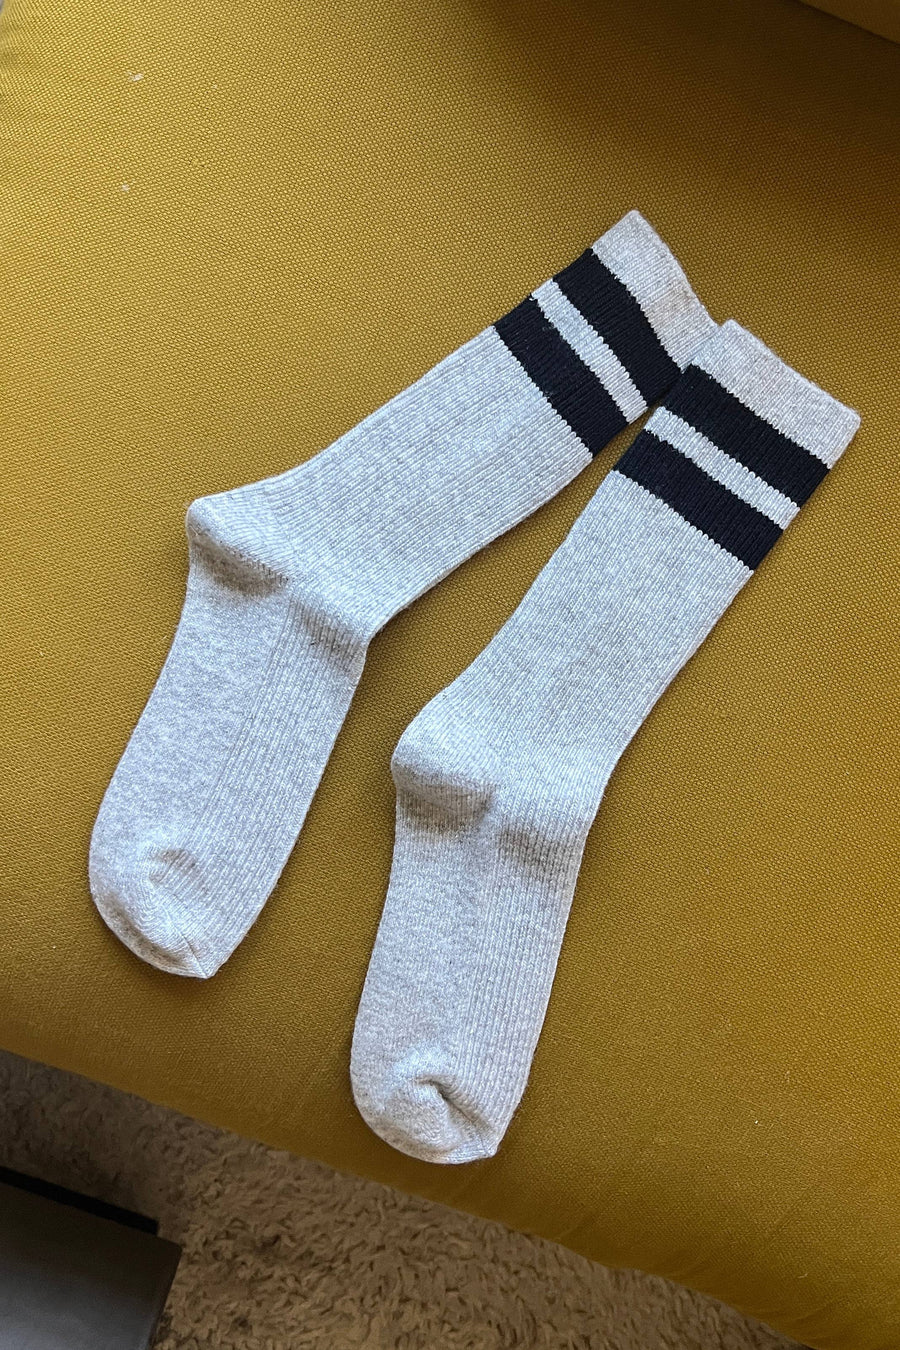 Grandpa Varsity Socks — Stranger and Co.